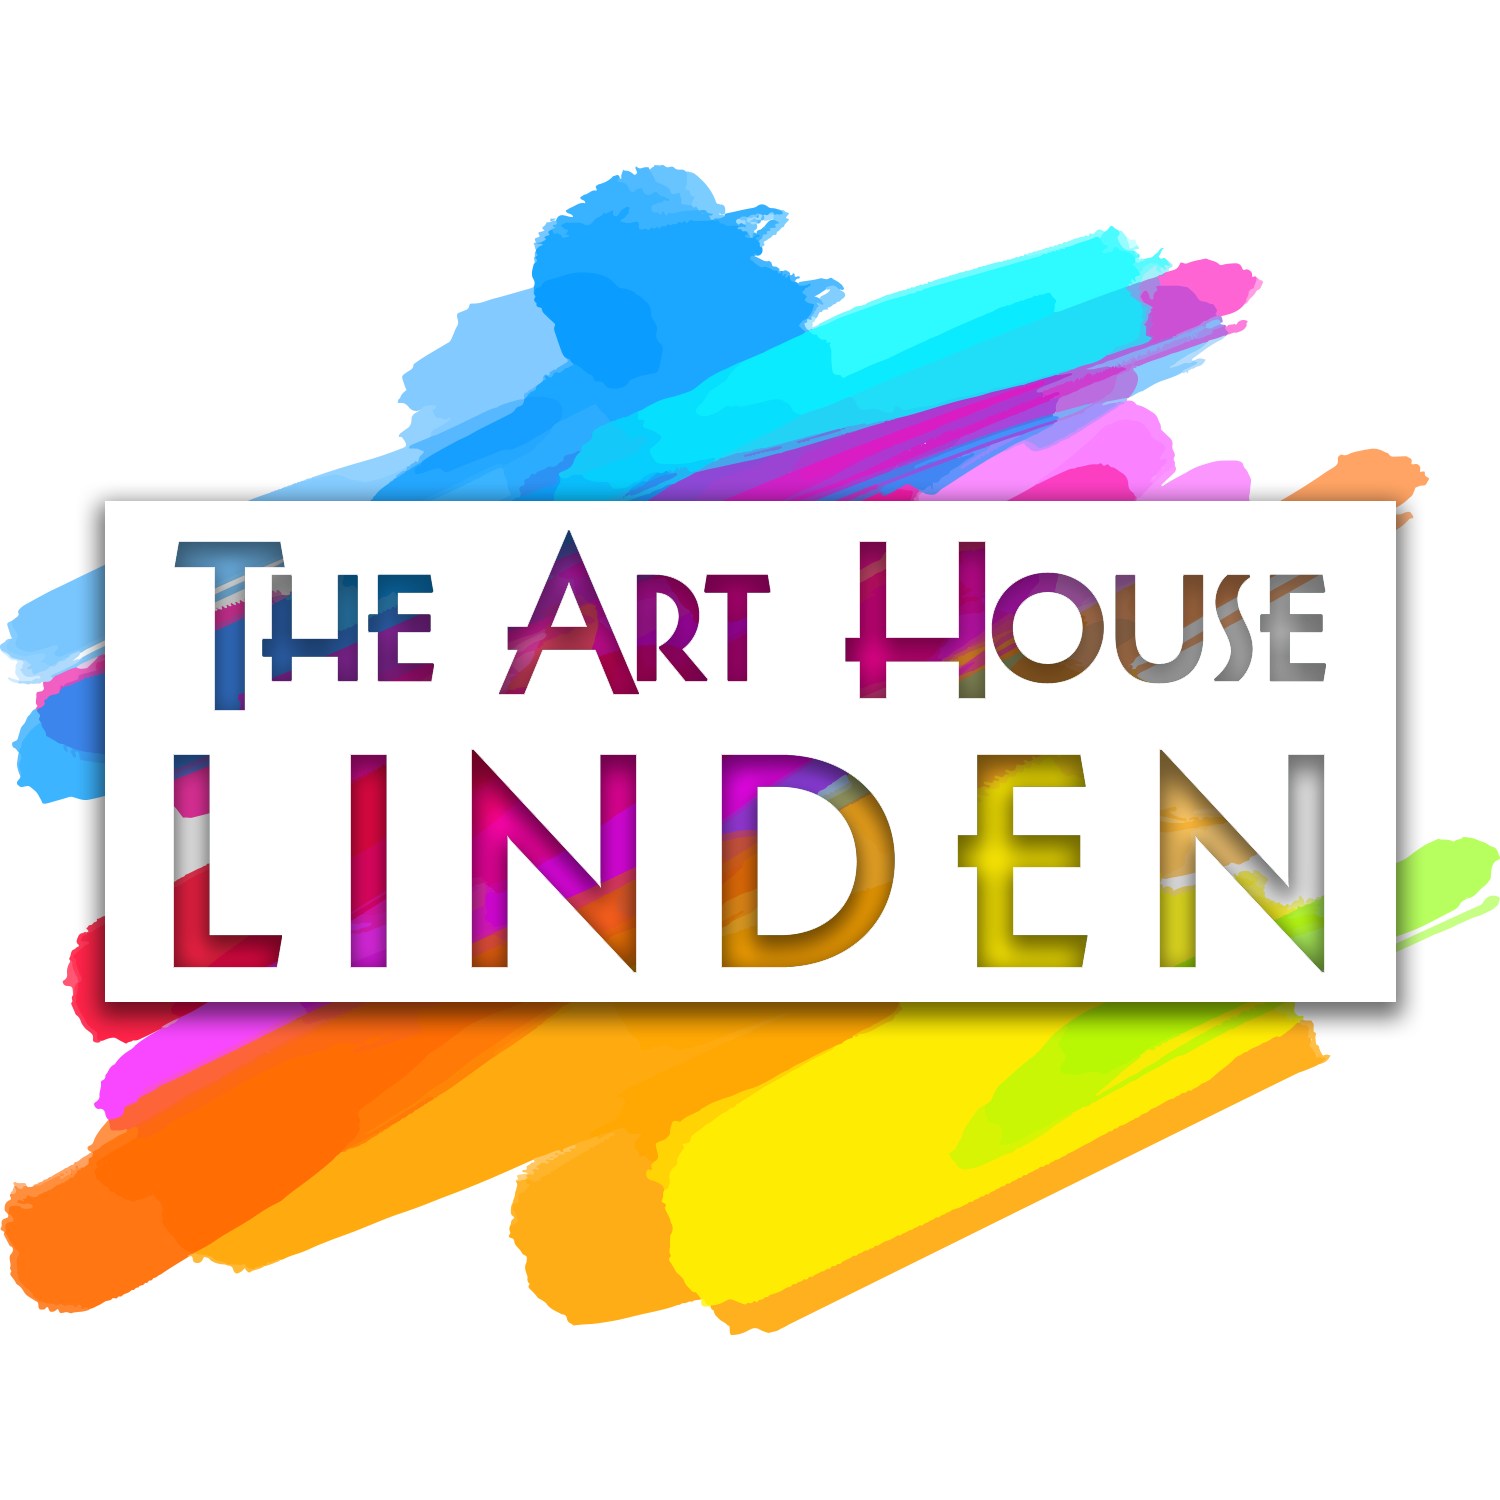 The Arthouse Linden